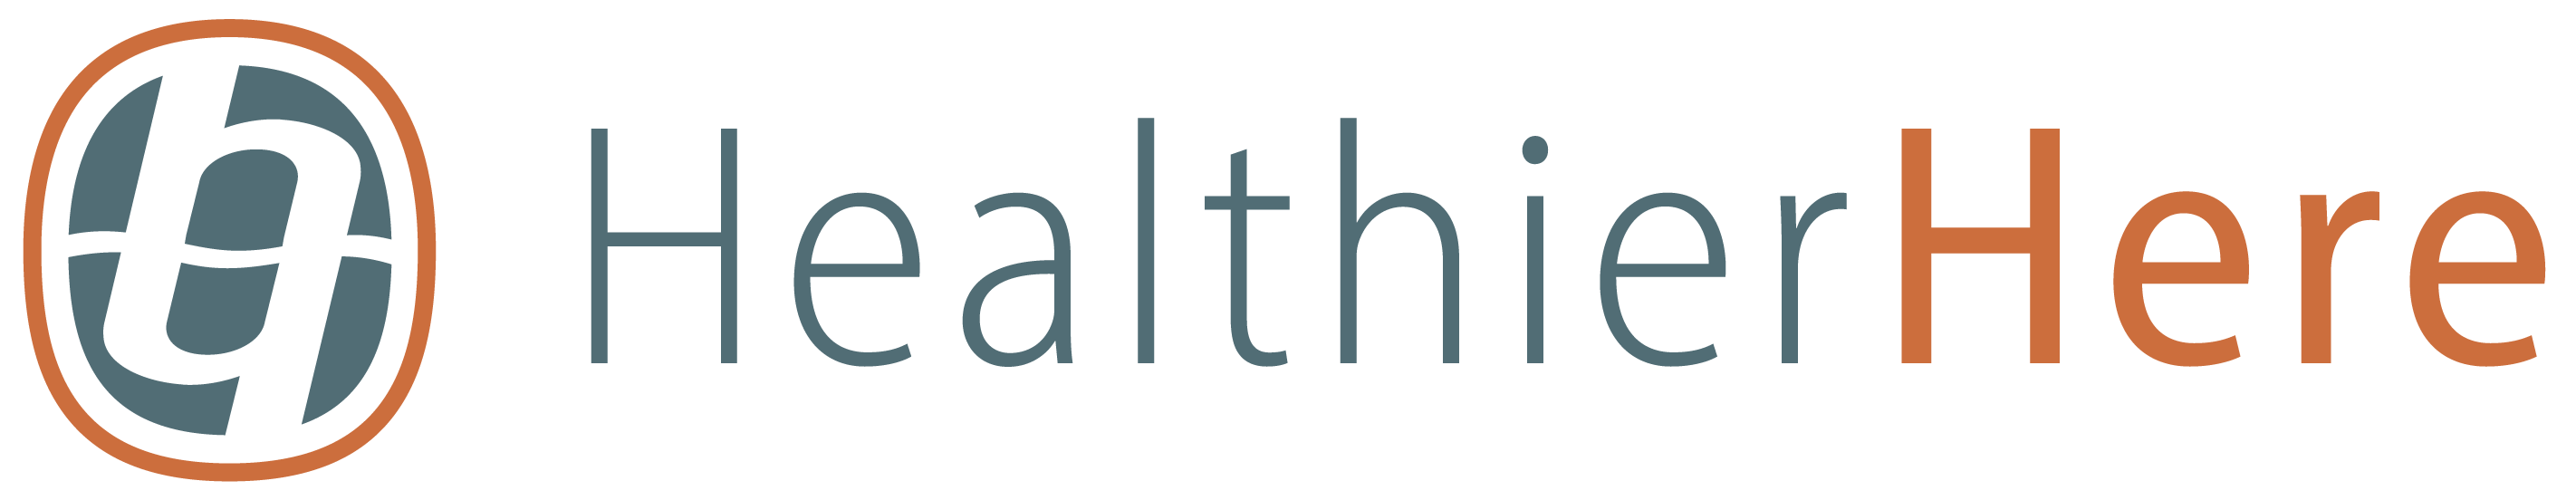 HealthierHere logo